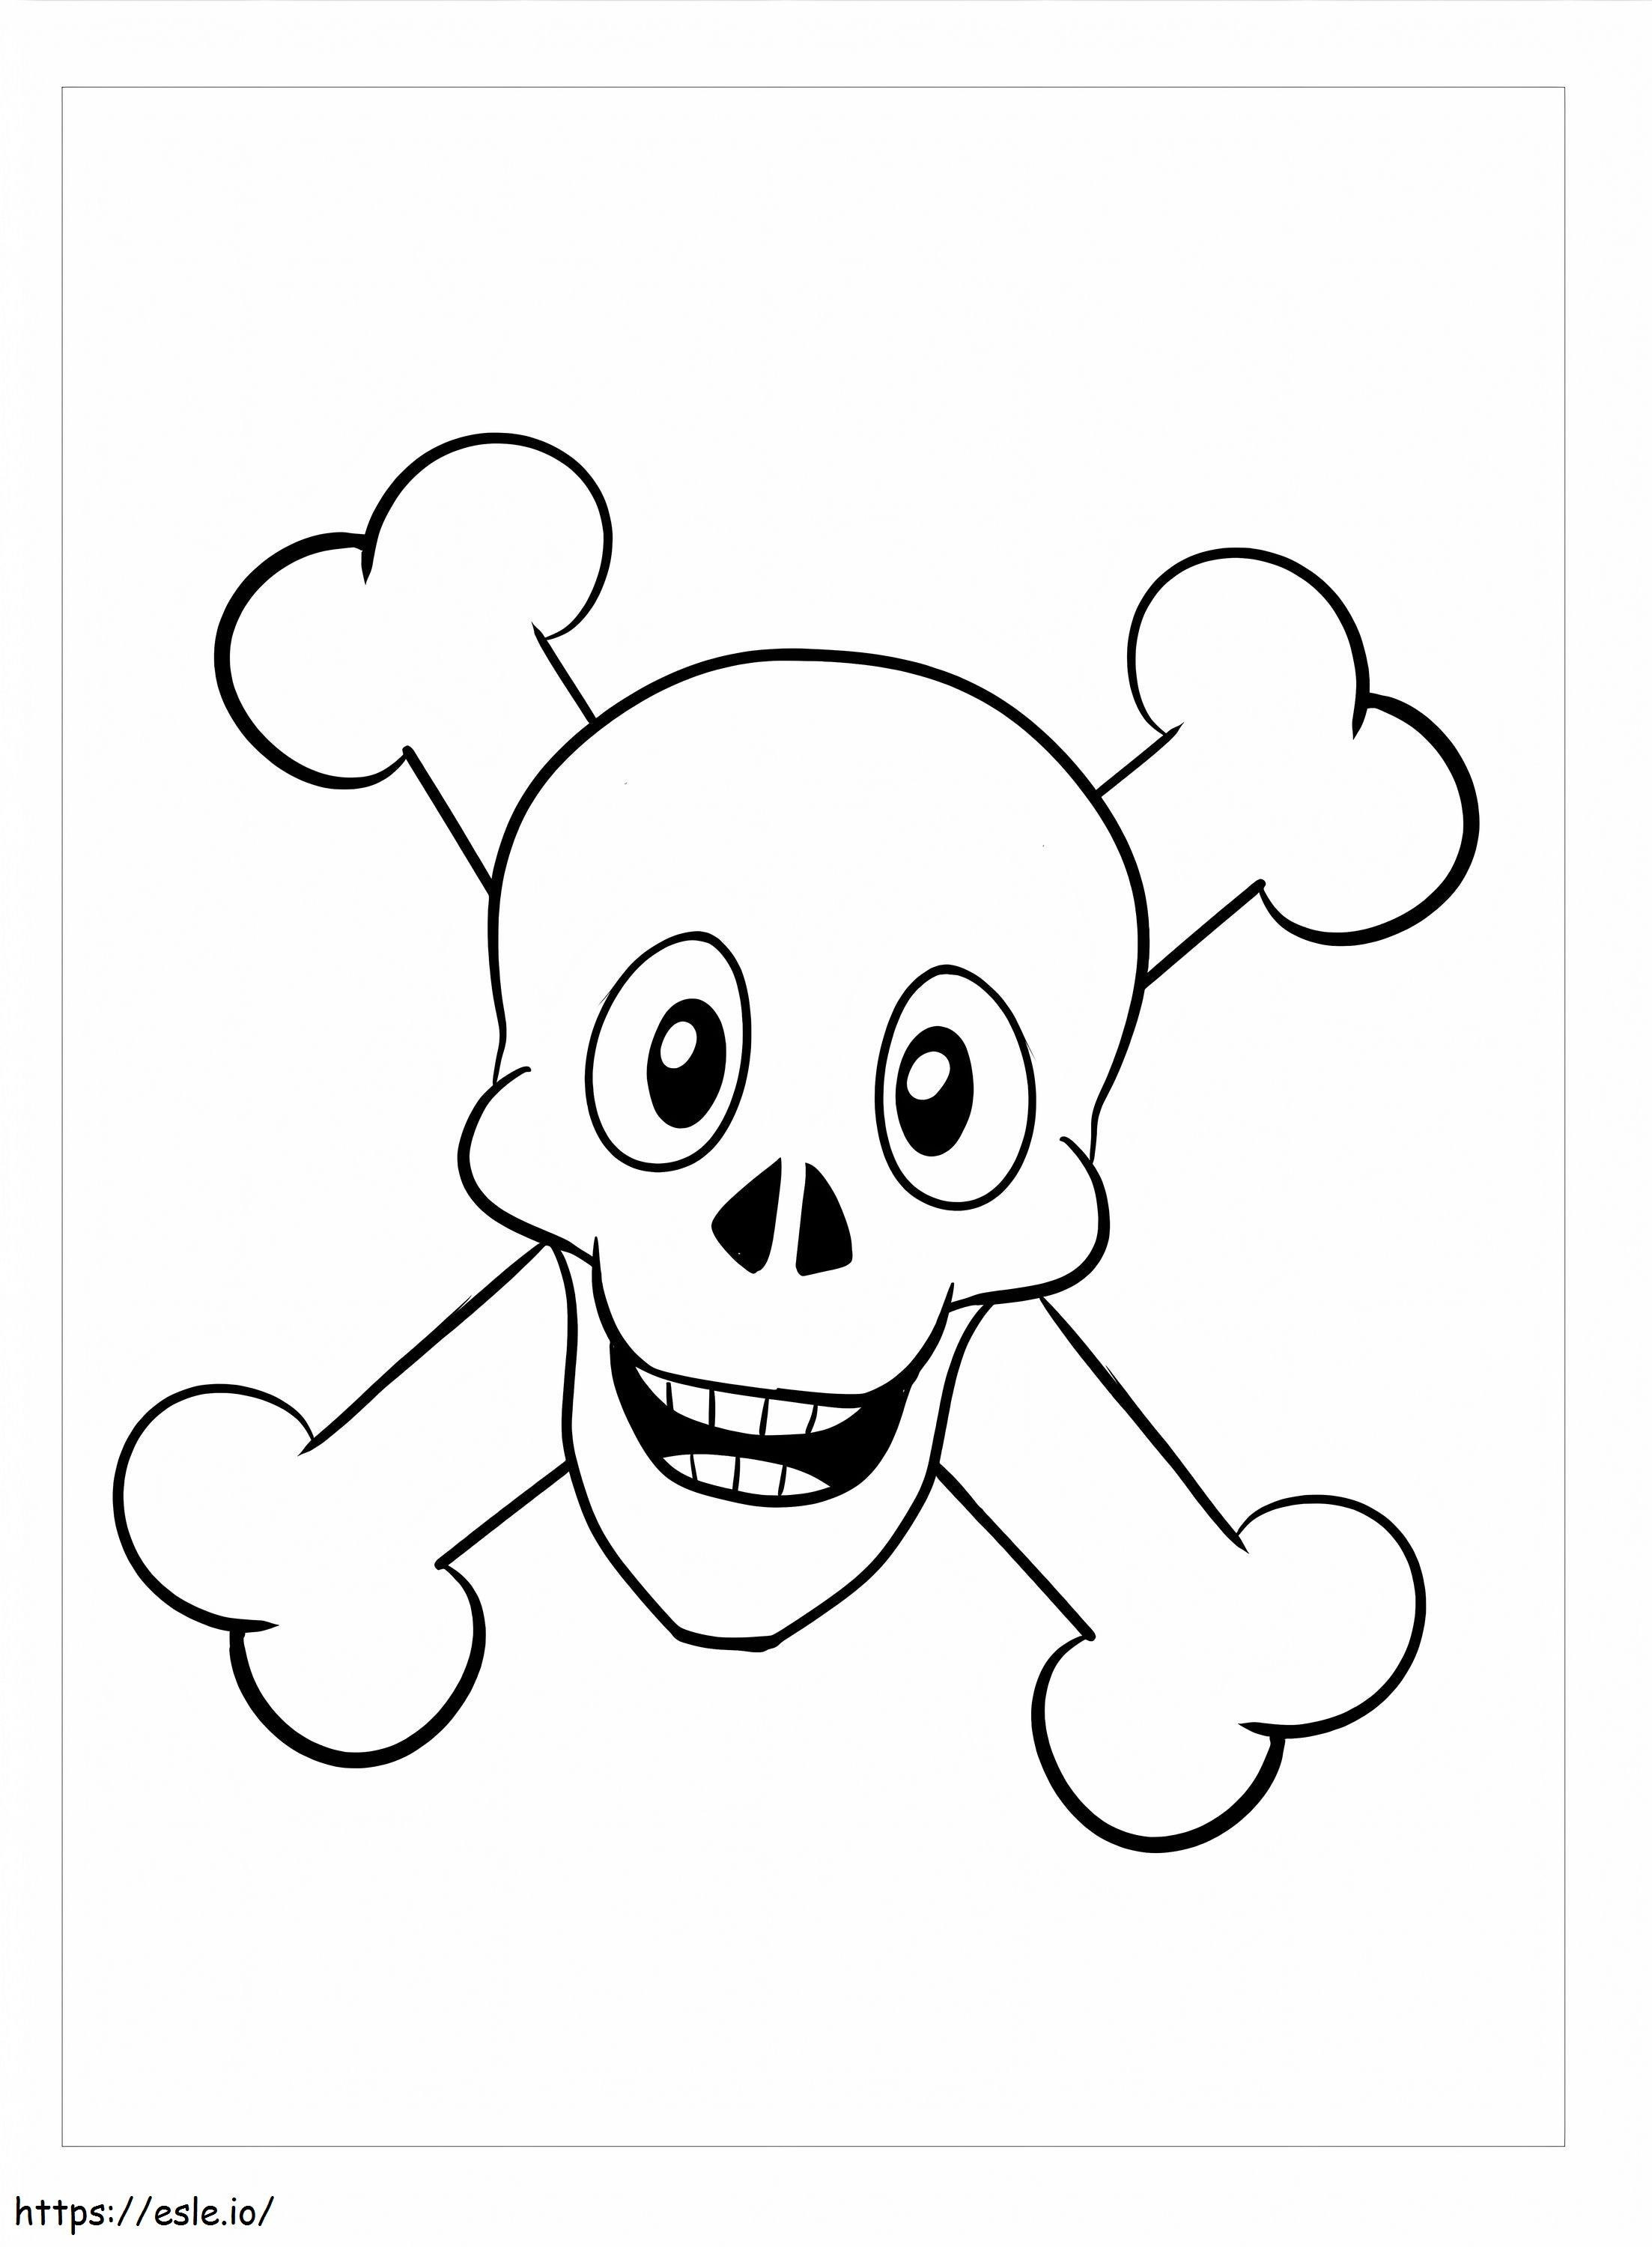 Cartoon Skull Fun coloring page